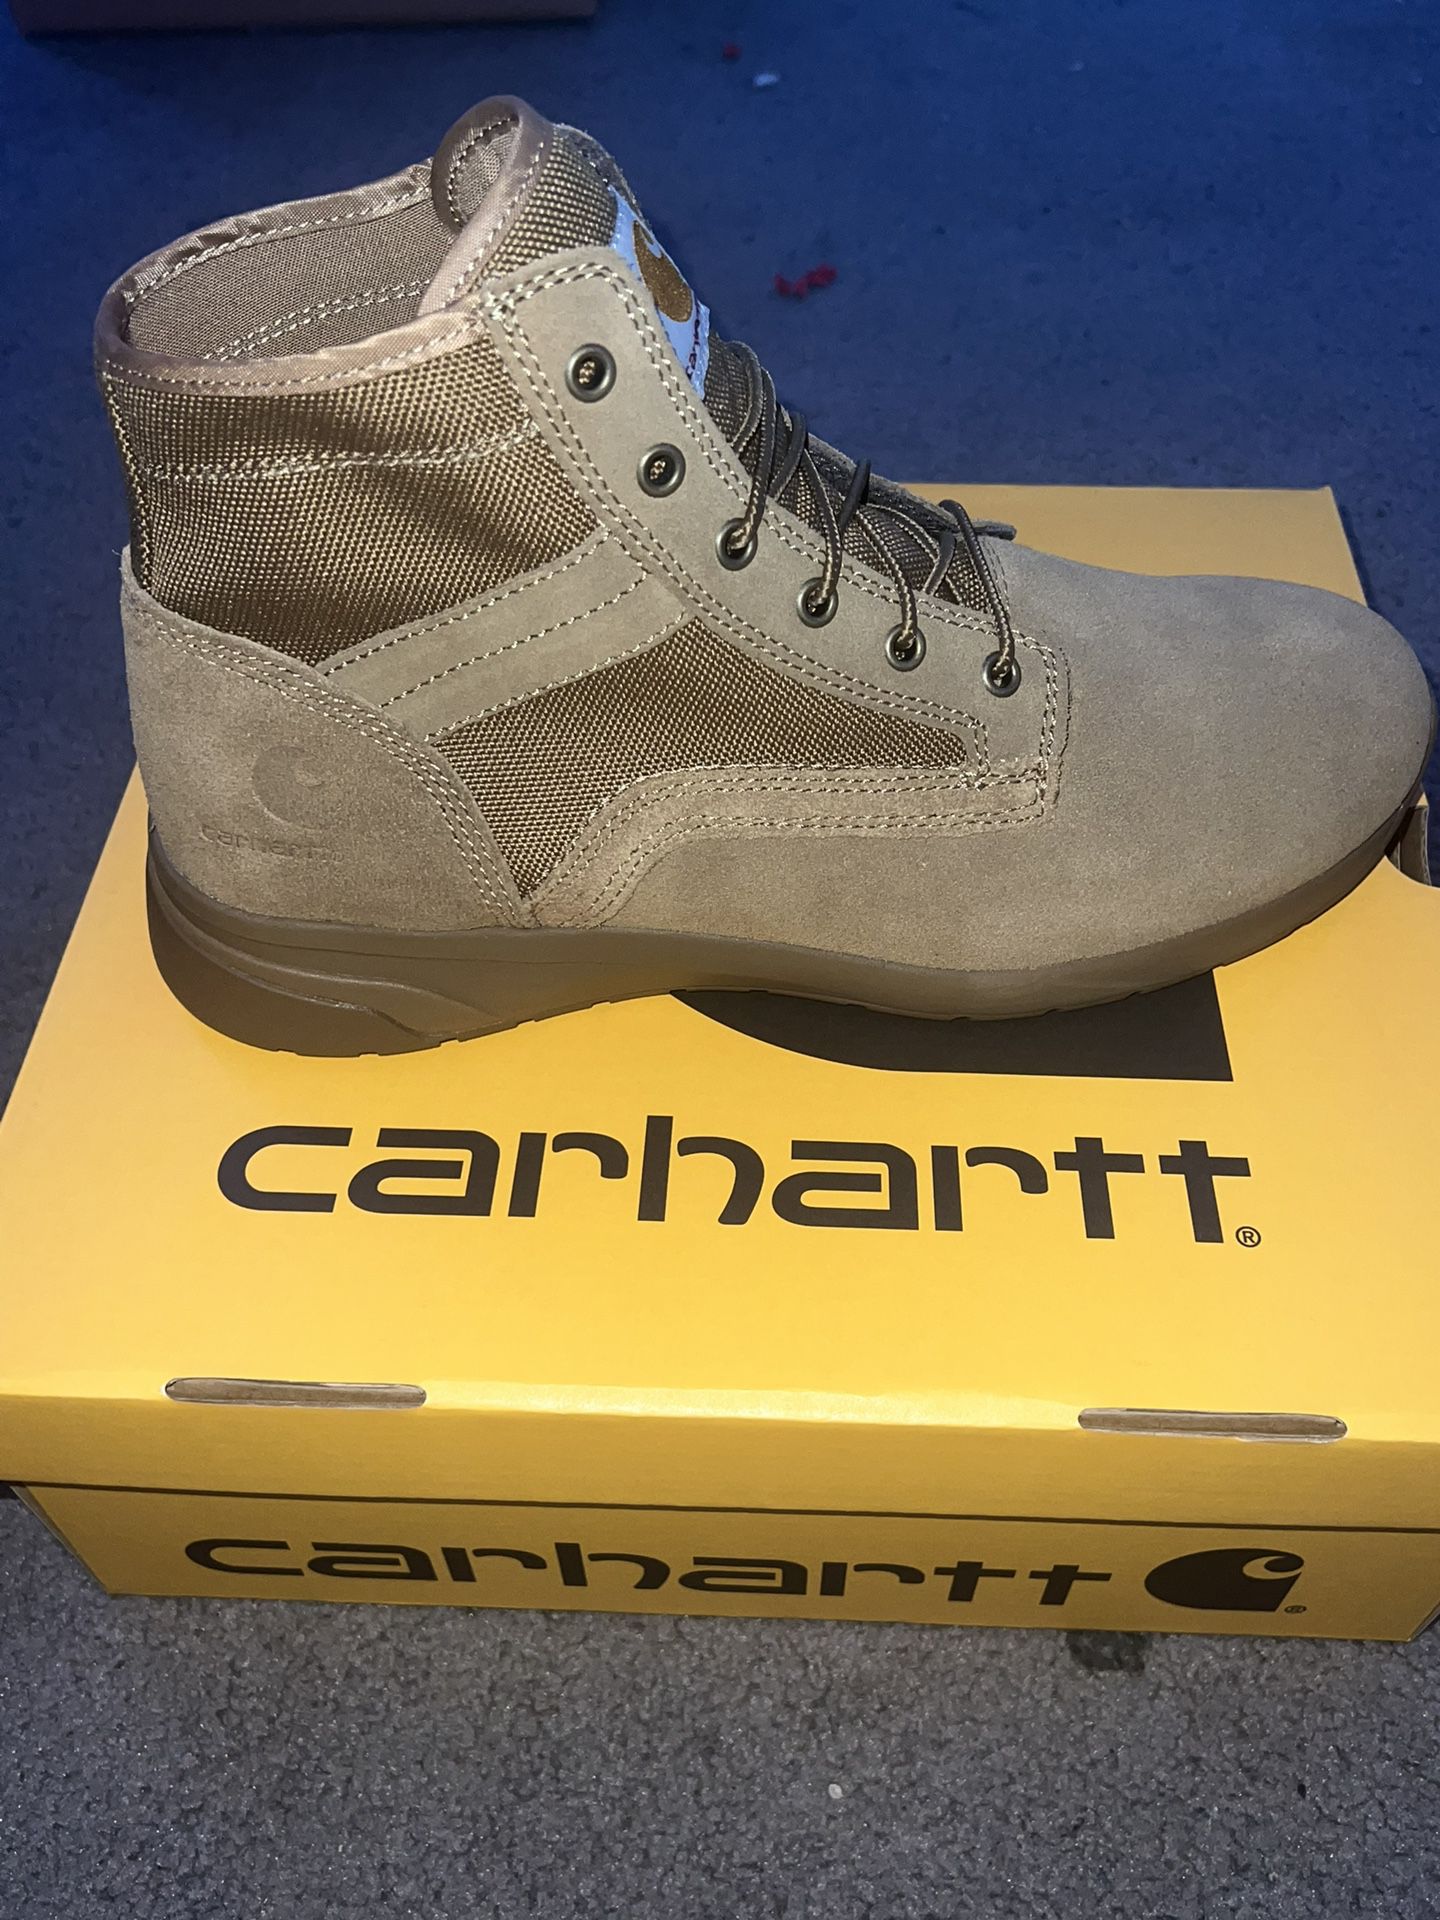 Carhartt Working Boots 